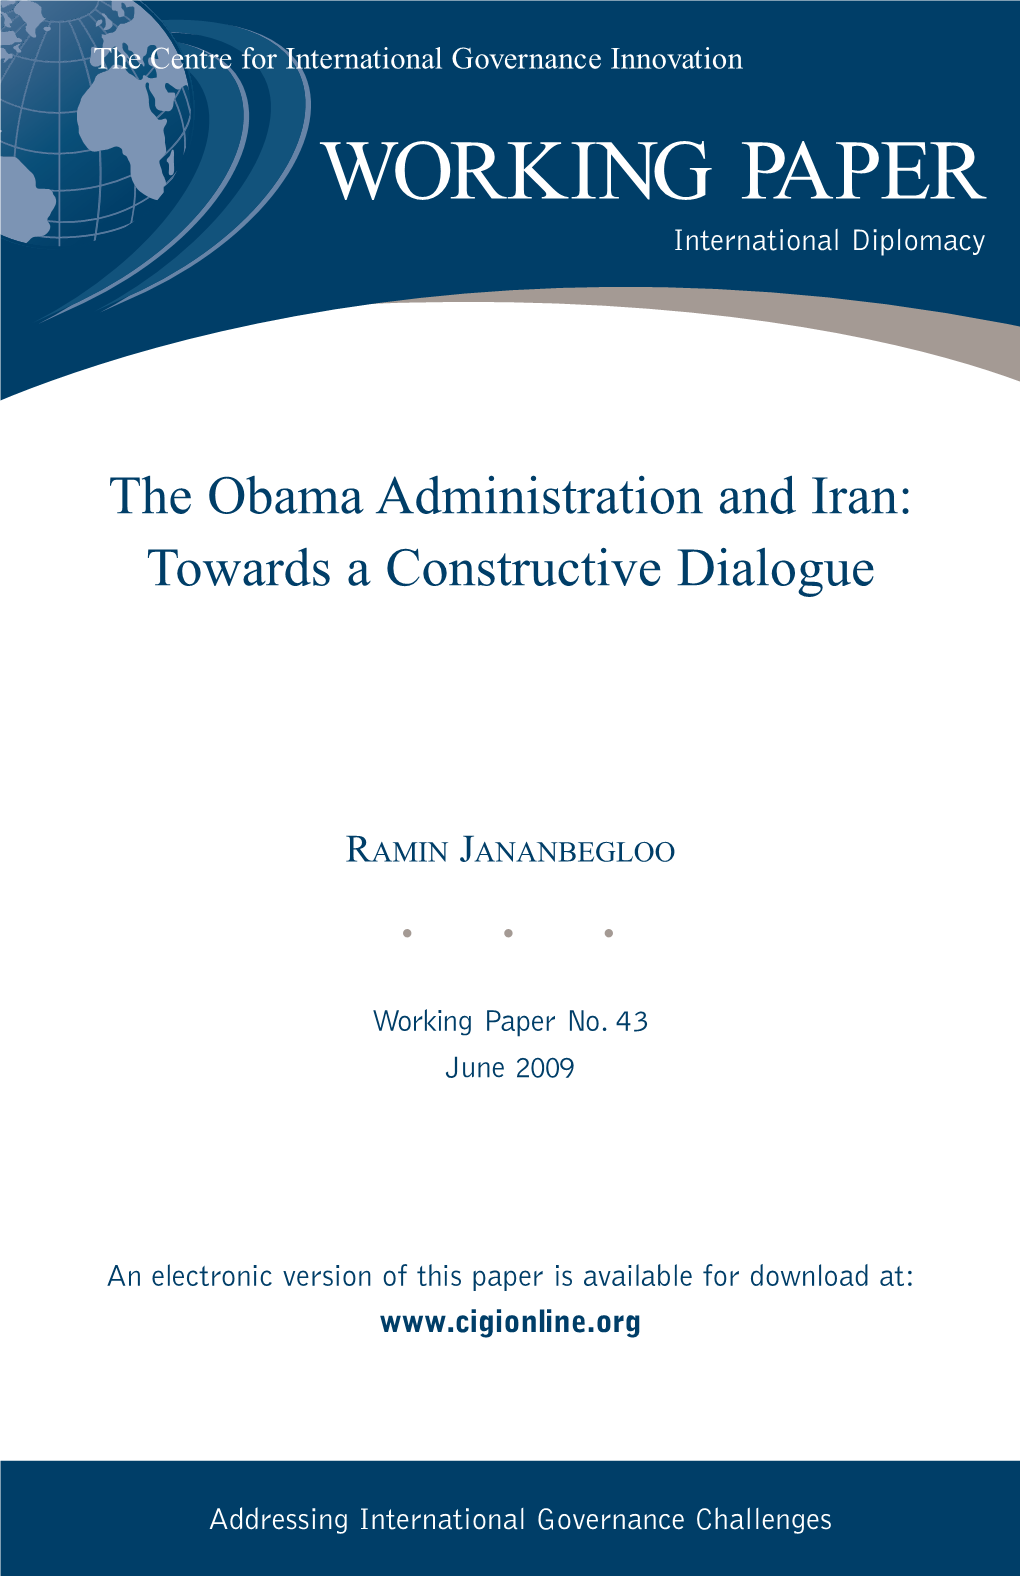 The Obama Administration and Iran: Towards a Constructive Dialogue